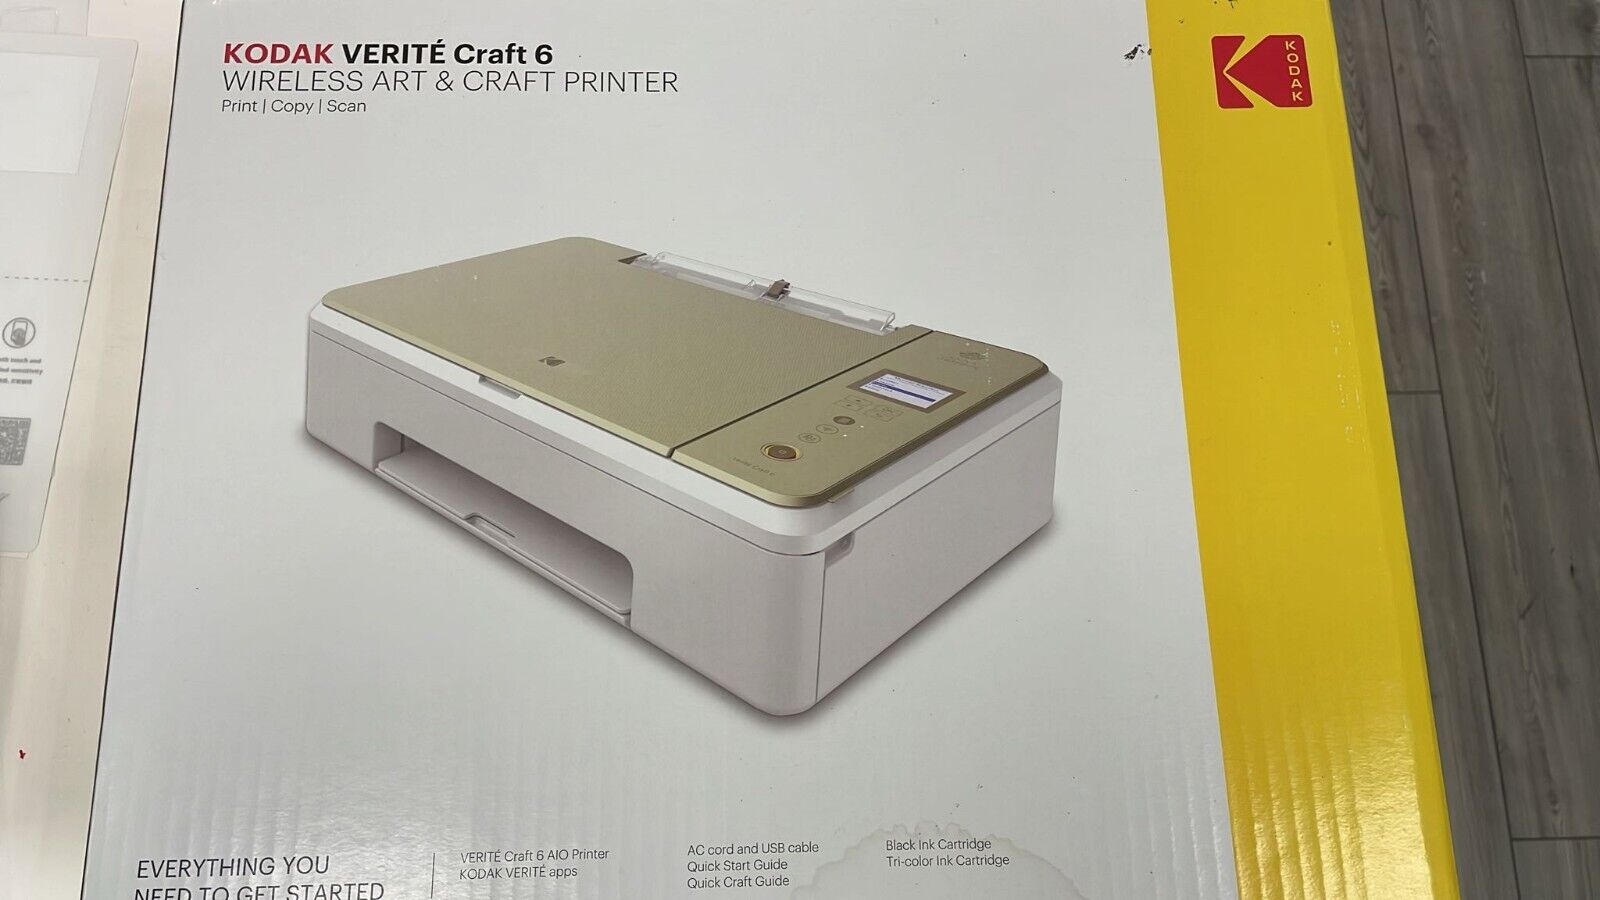 Kodak Verite Craft 6 Wireless Art and Craft All in One Print Copy Scan